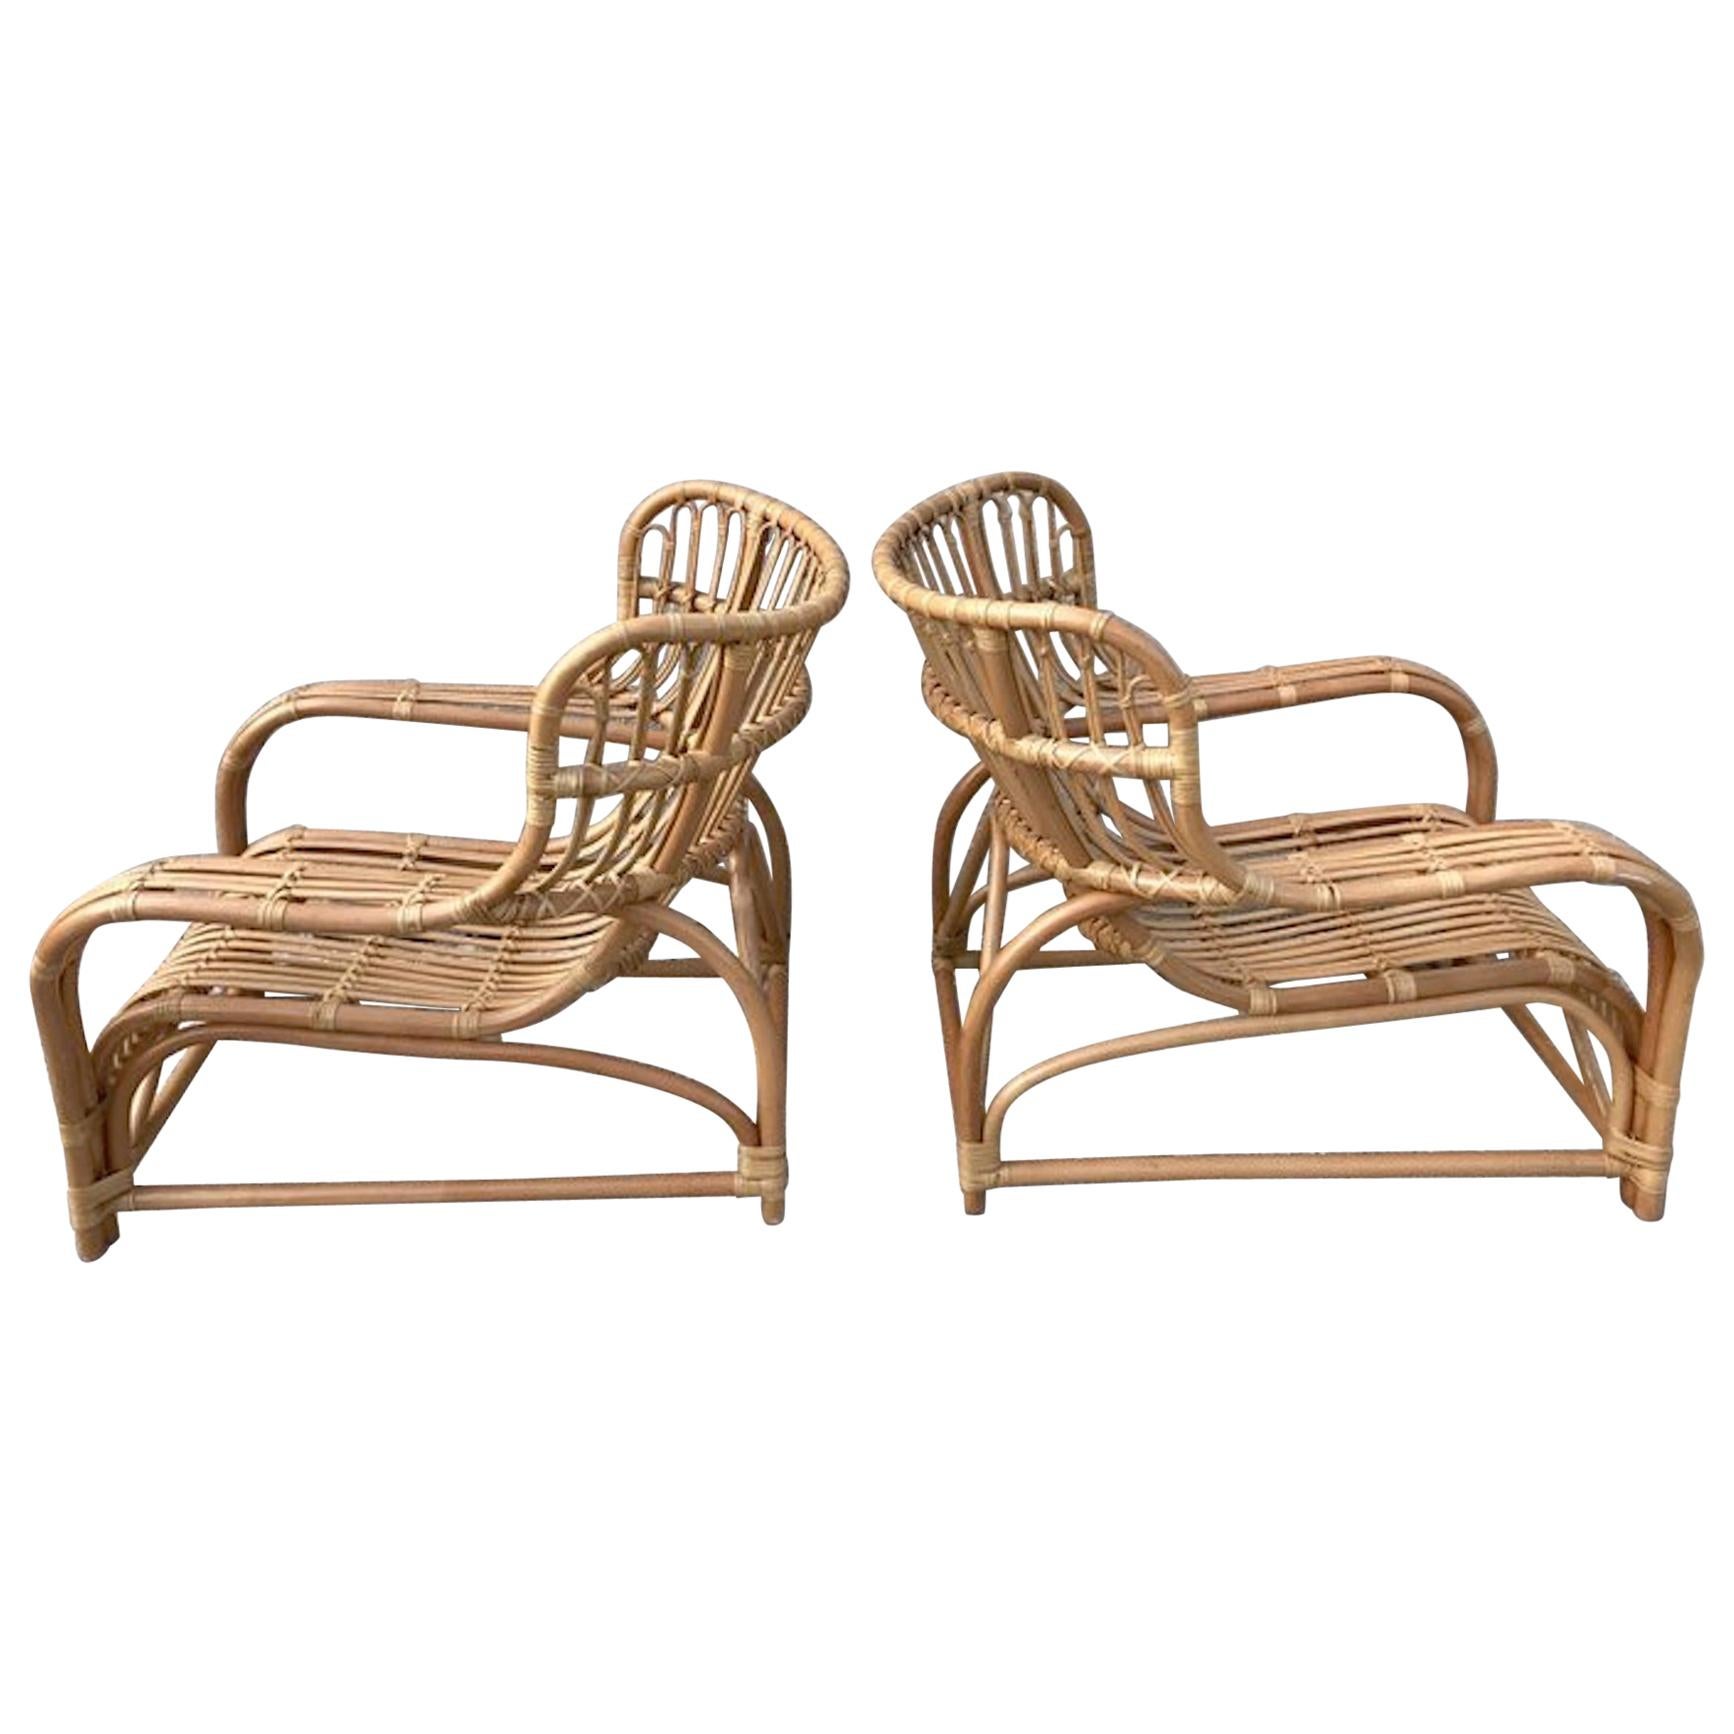 Pair of Midcentury Rattan Scoop Chairs, Restored